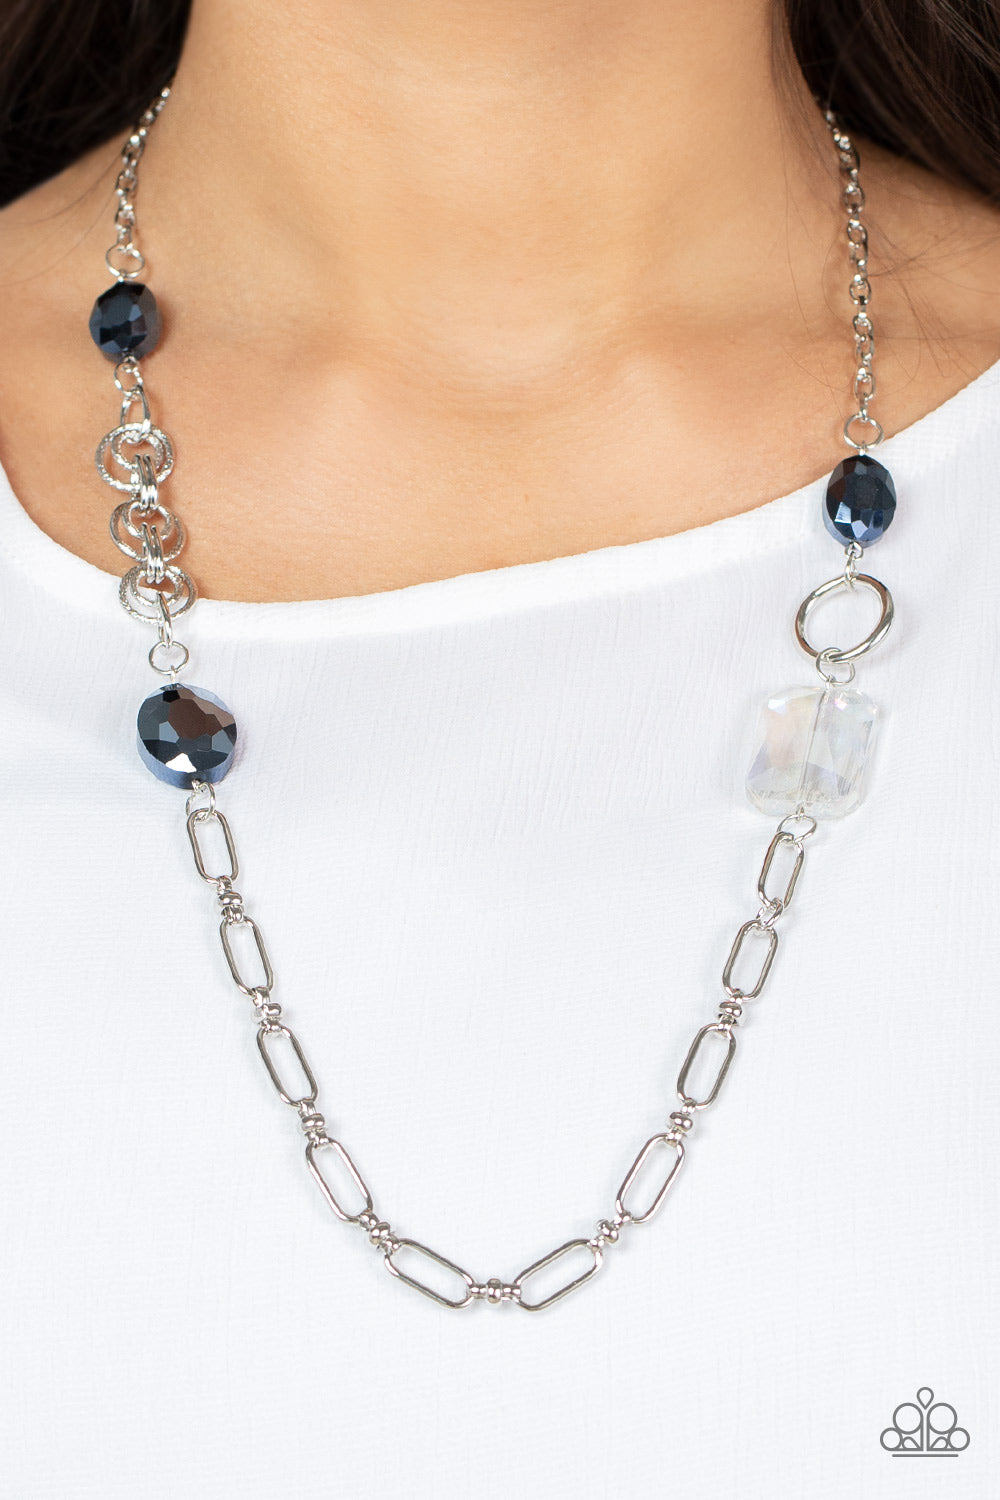 Famous and Fabulous - Blue Necklace - Paparazzi Accessories